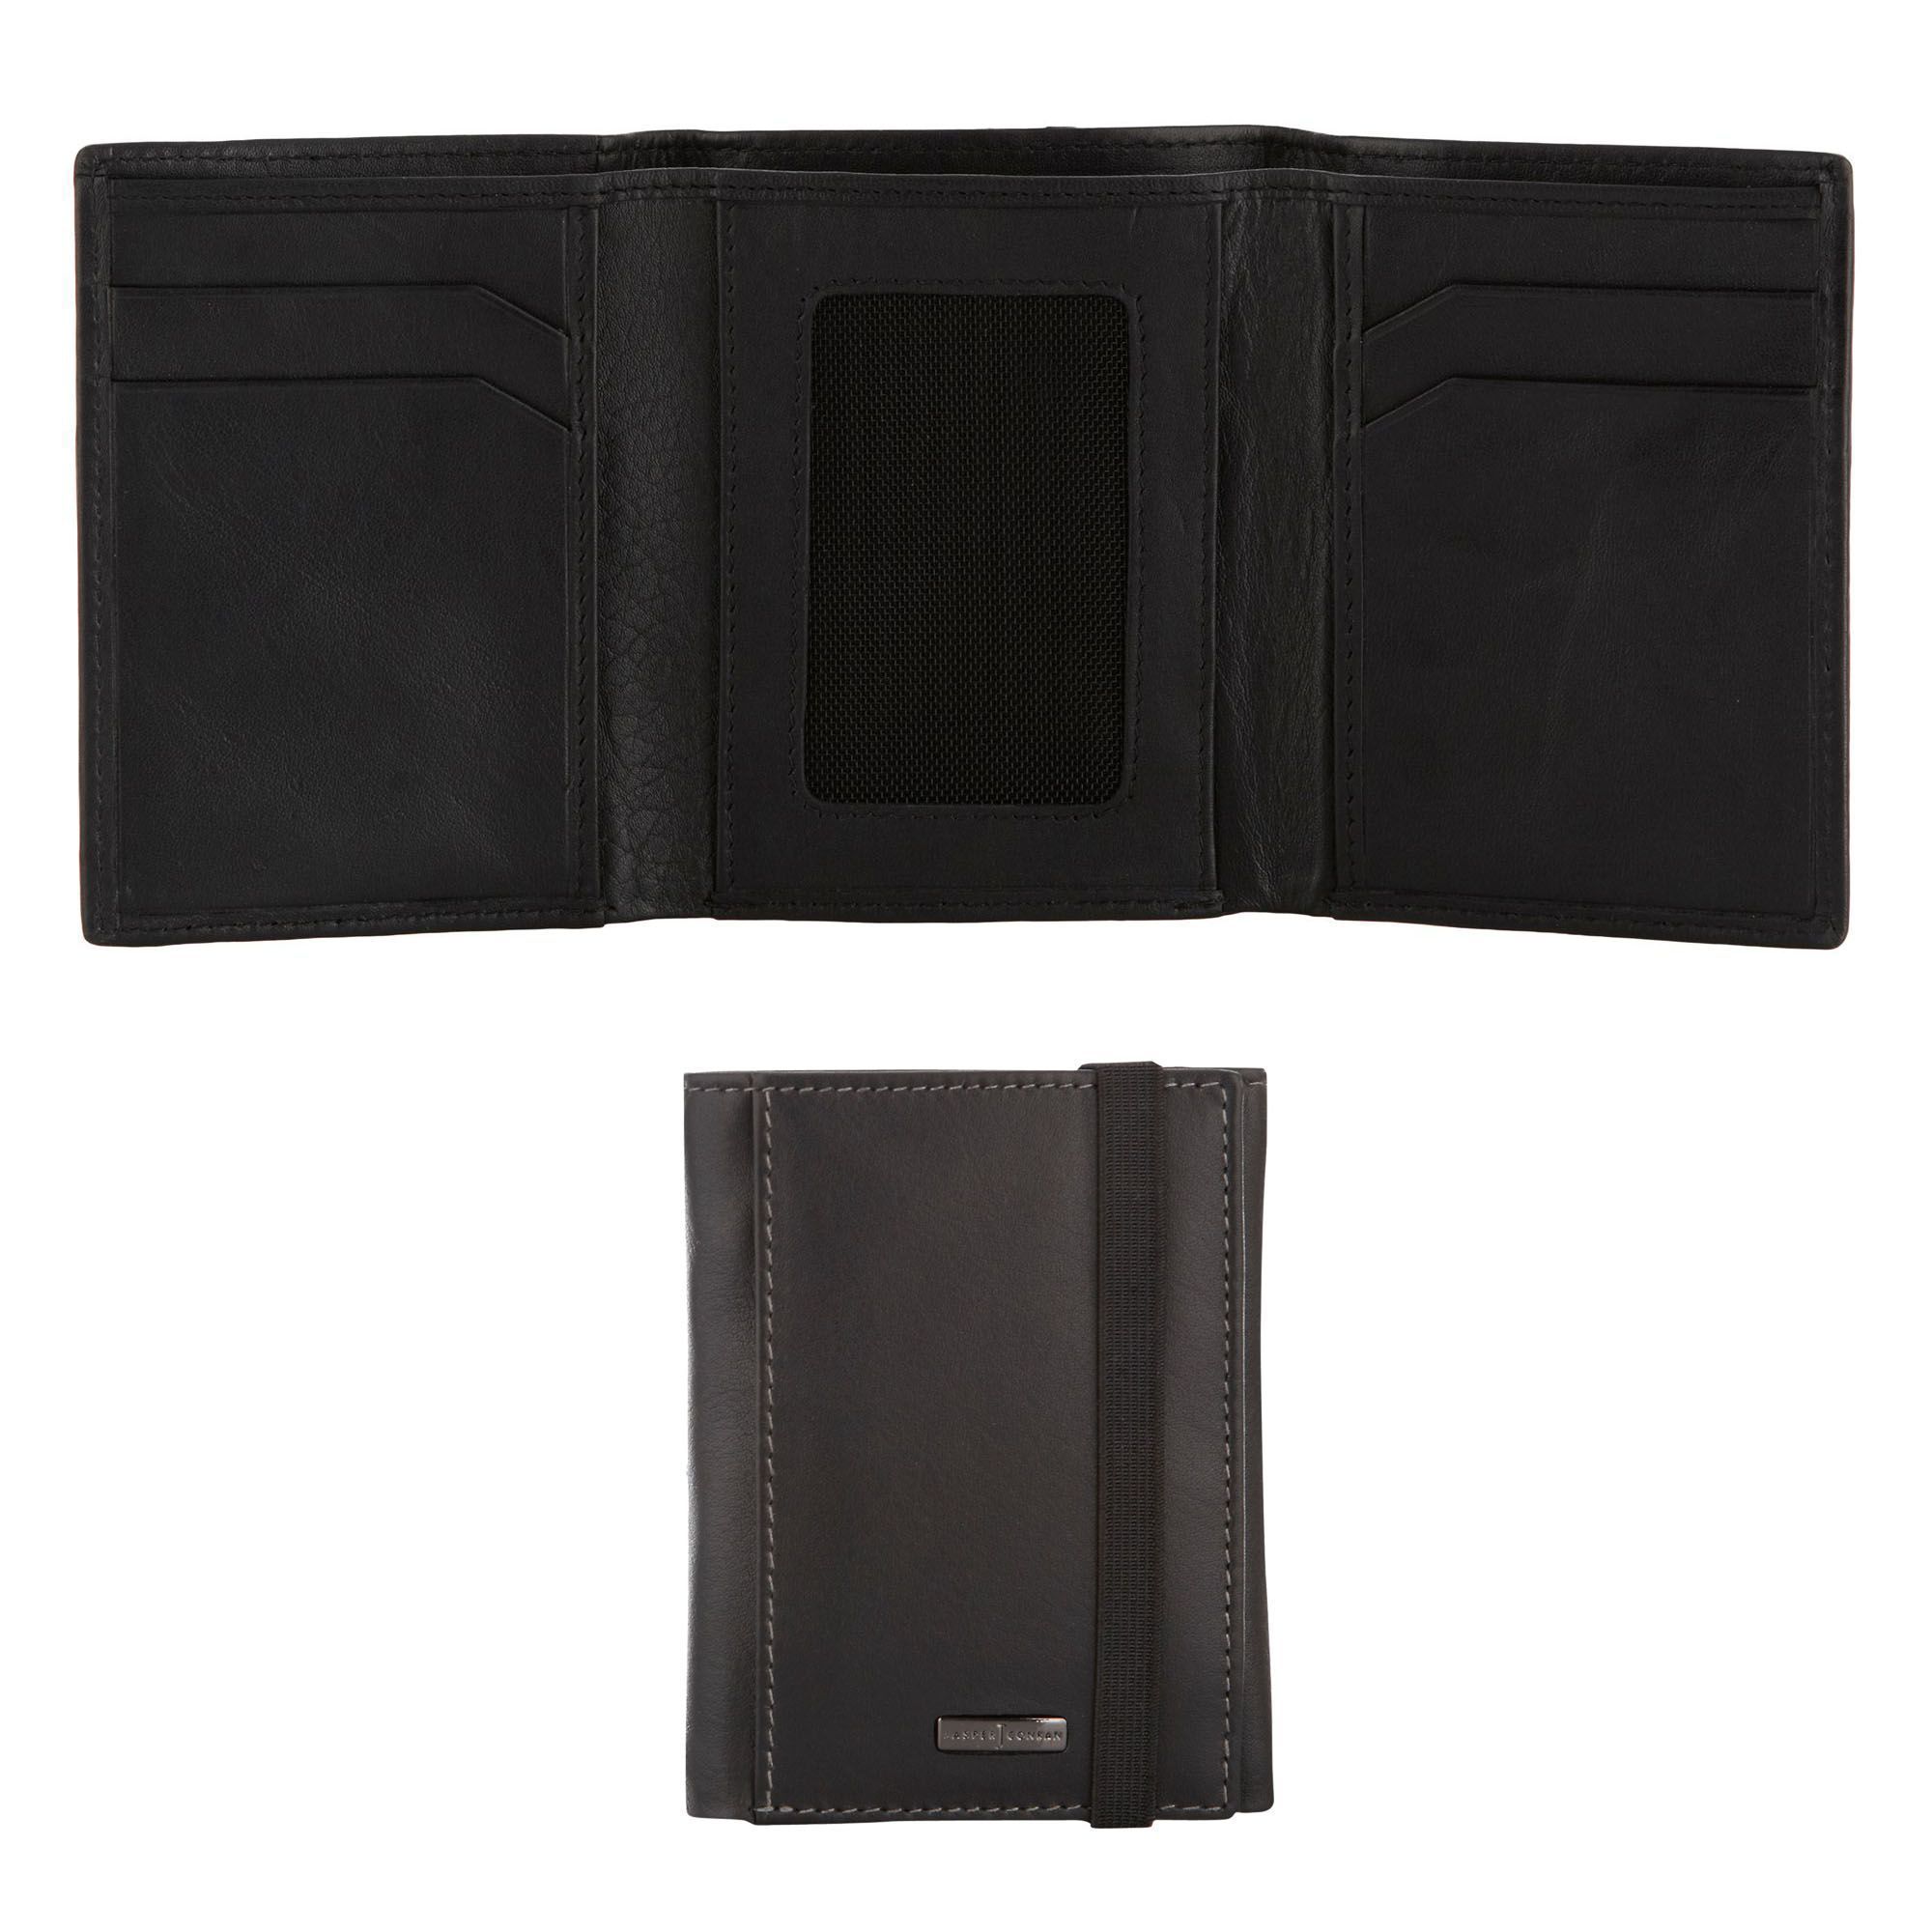 J By Jasper Conran Mens Black Leather Trifold Wallet In A Gift Box | eBay